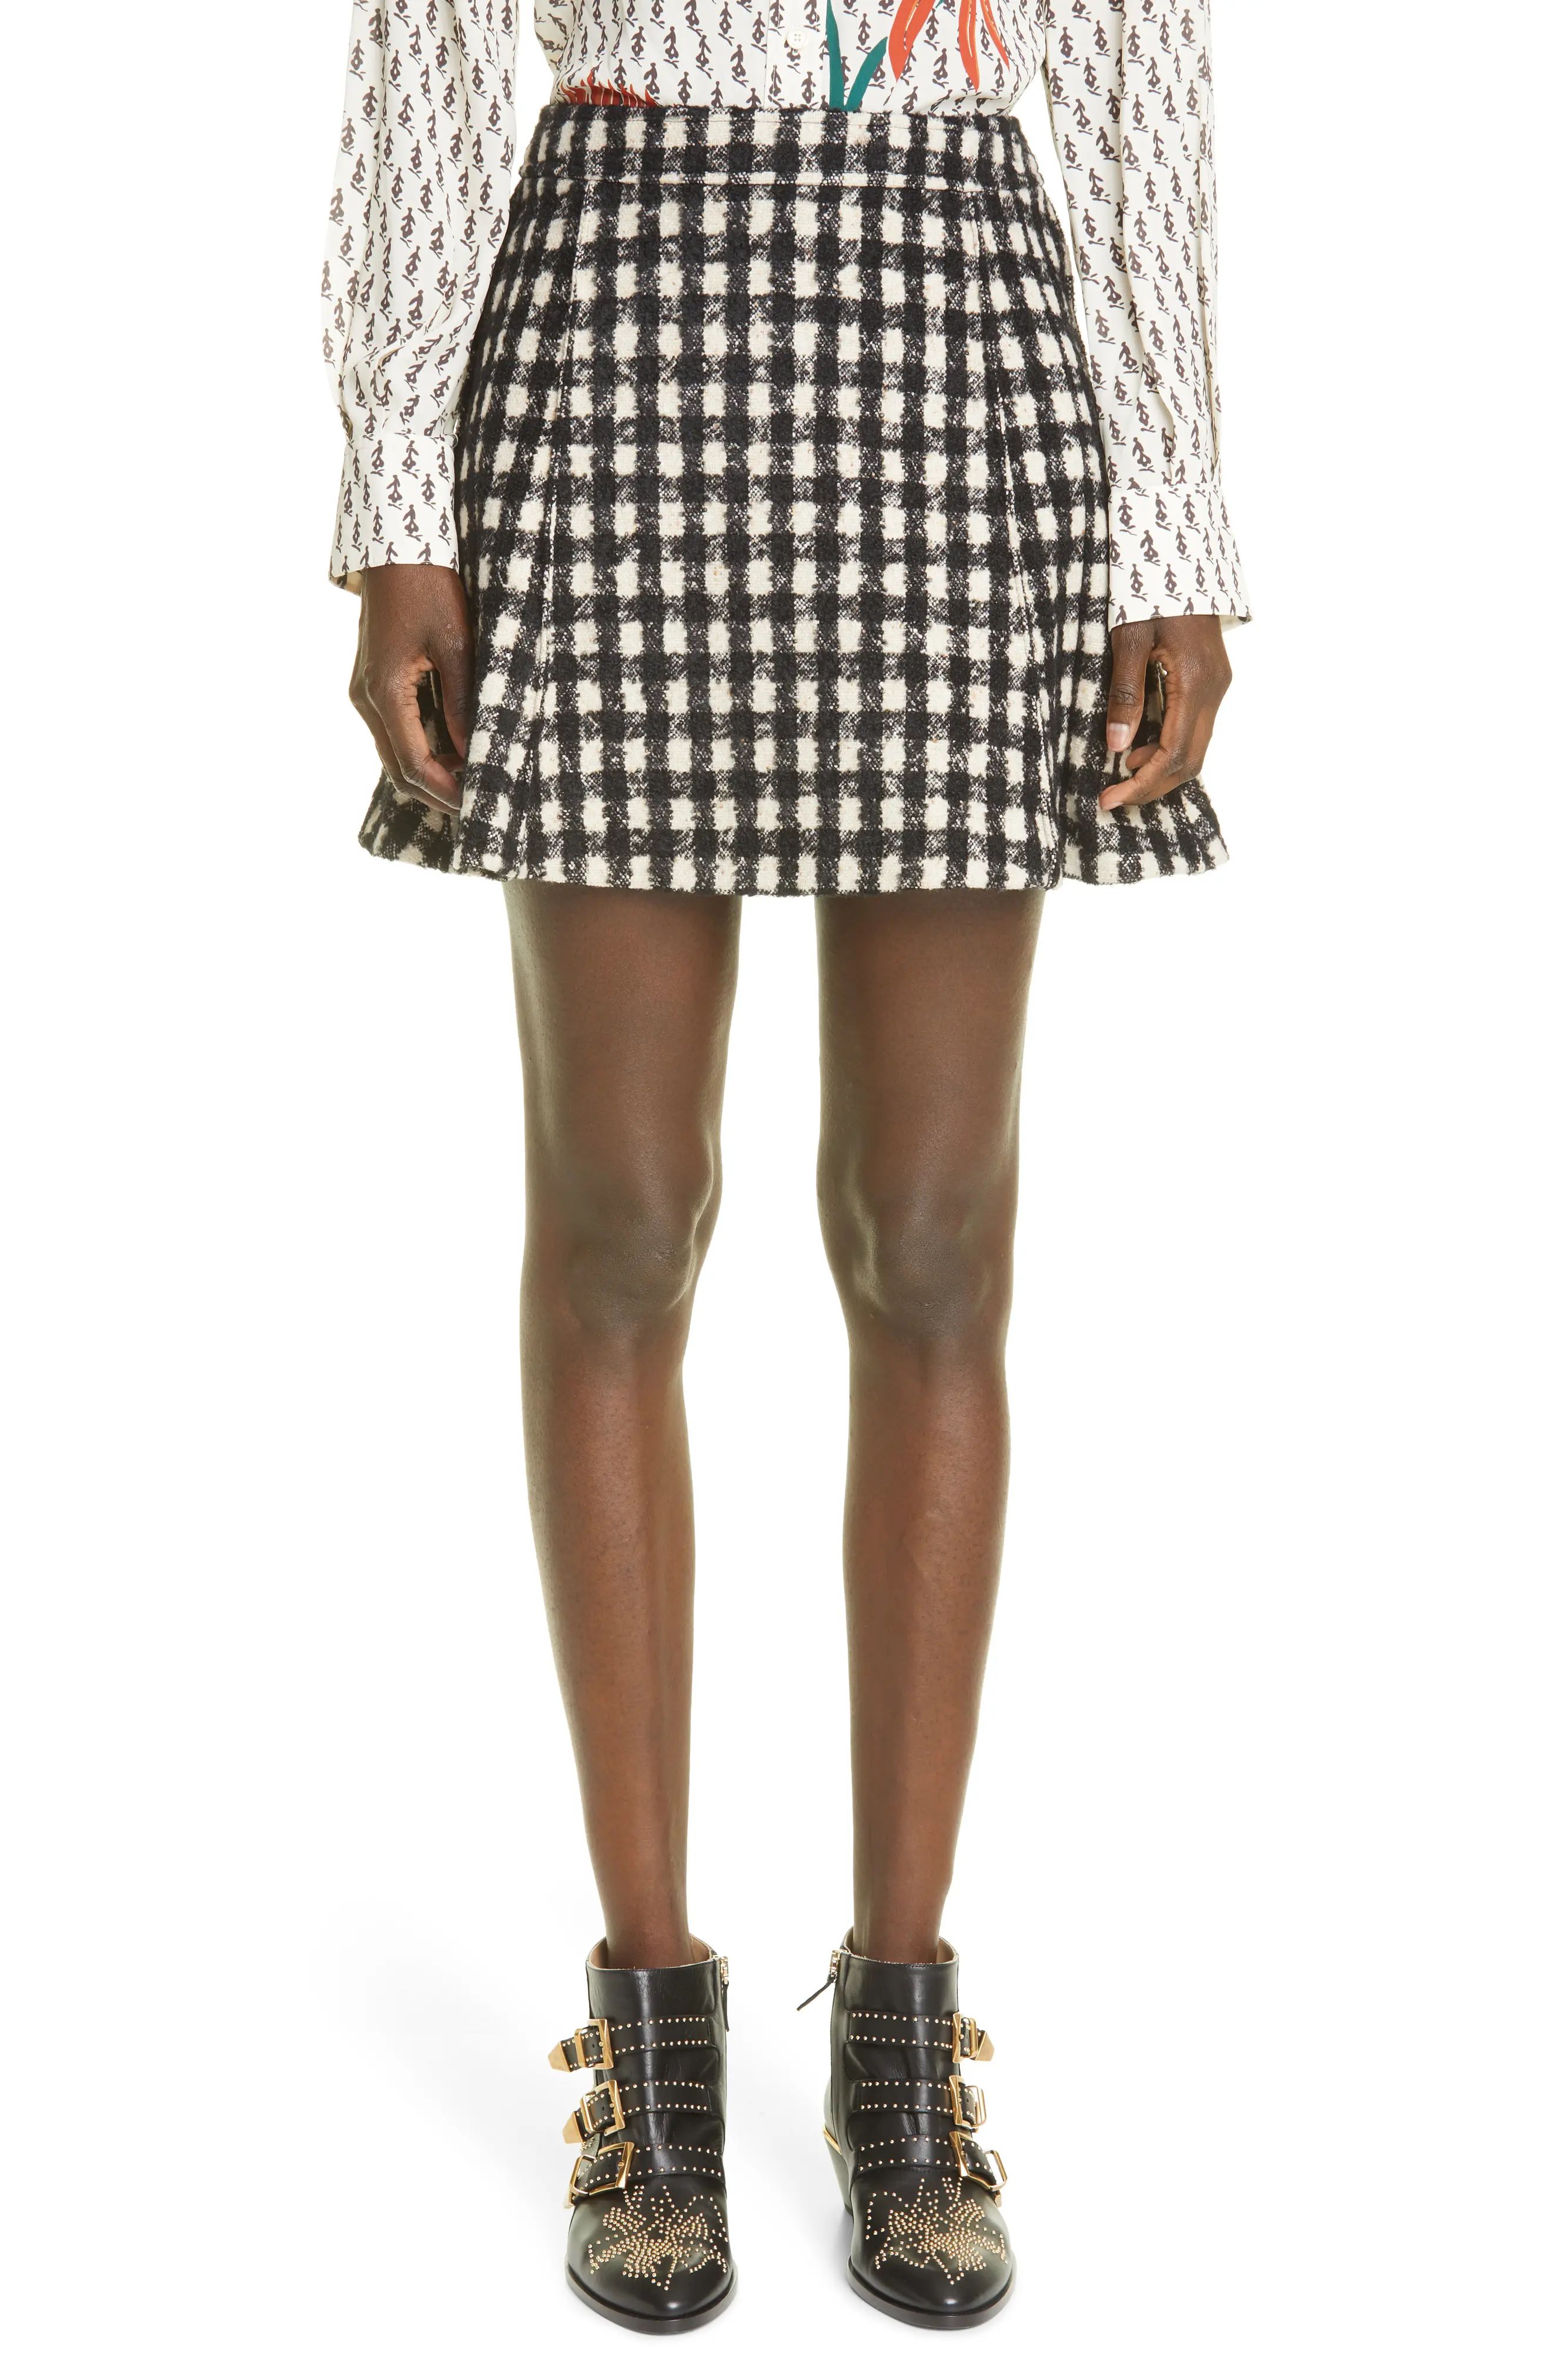 Chloe Check Skirt, Size 6 Us in Black White 1 905 at Nordstrom | Nordstrom